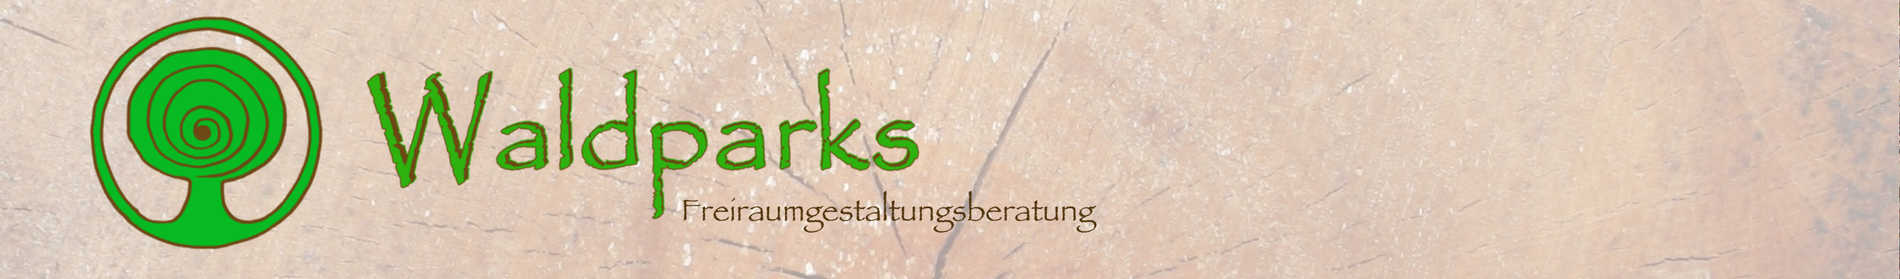 Waldparks Logo